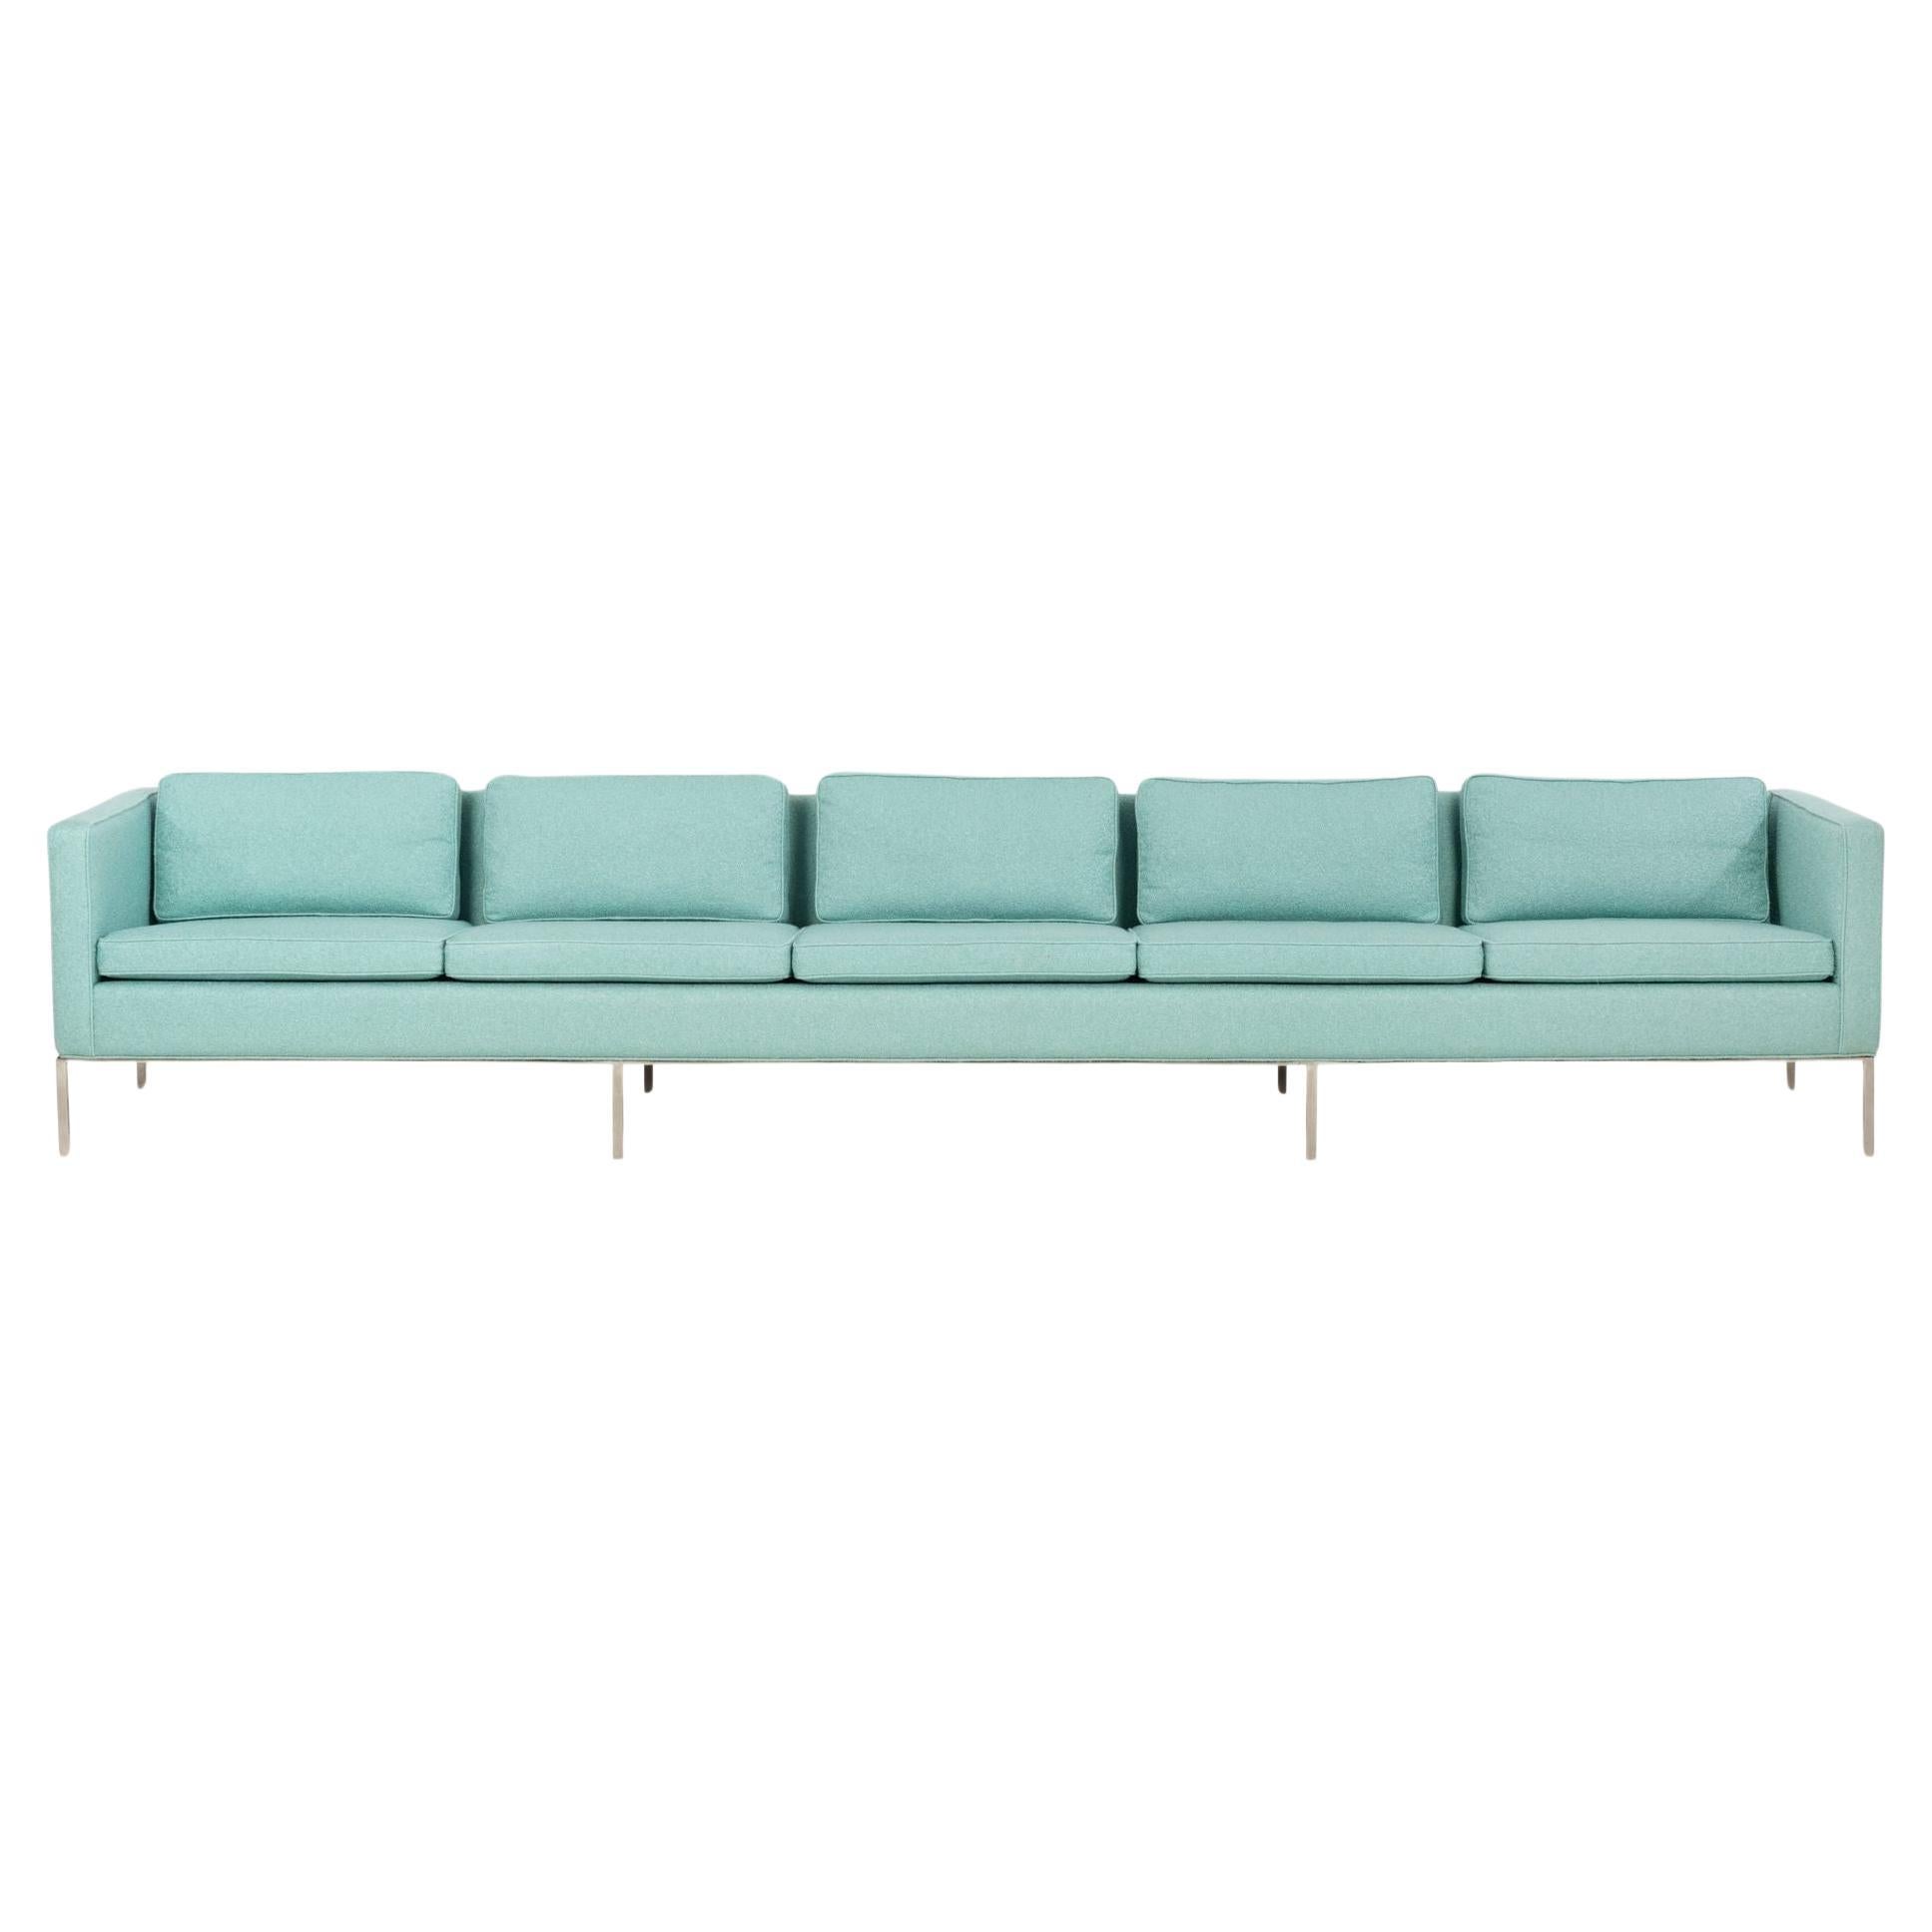 William Armbruster Custom Monumental five-seat Sofa for Chase Manhattan